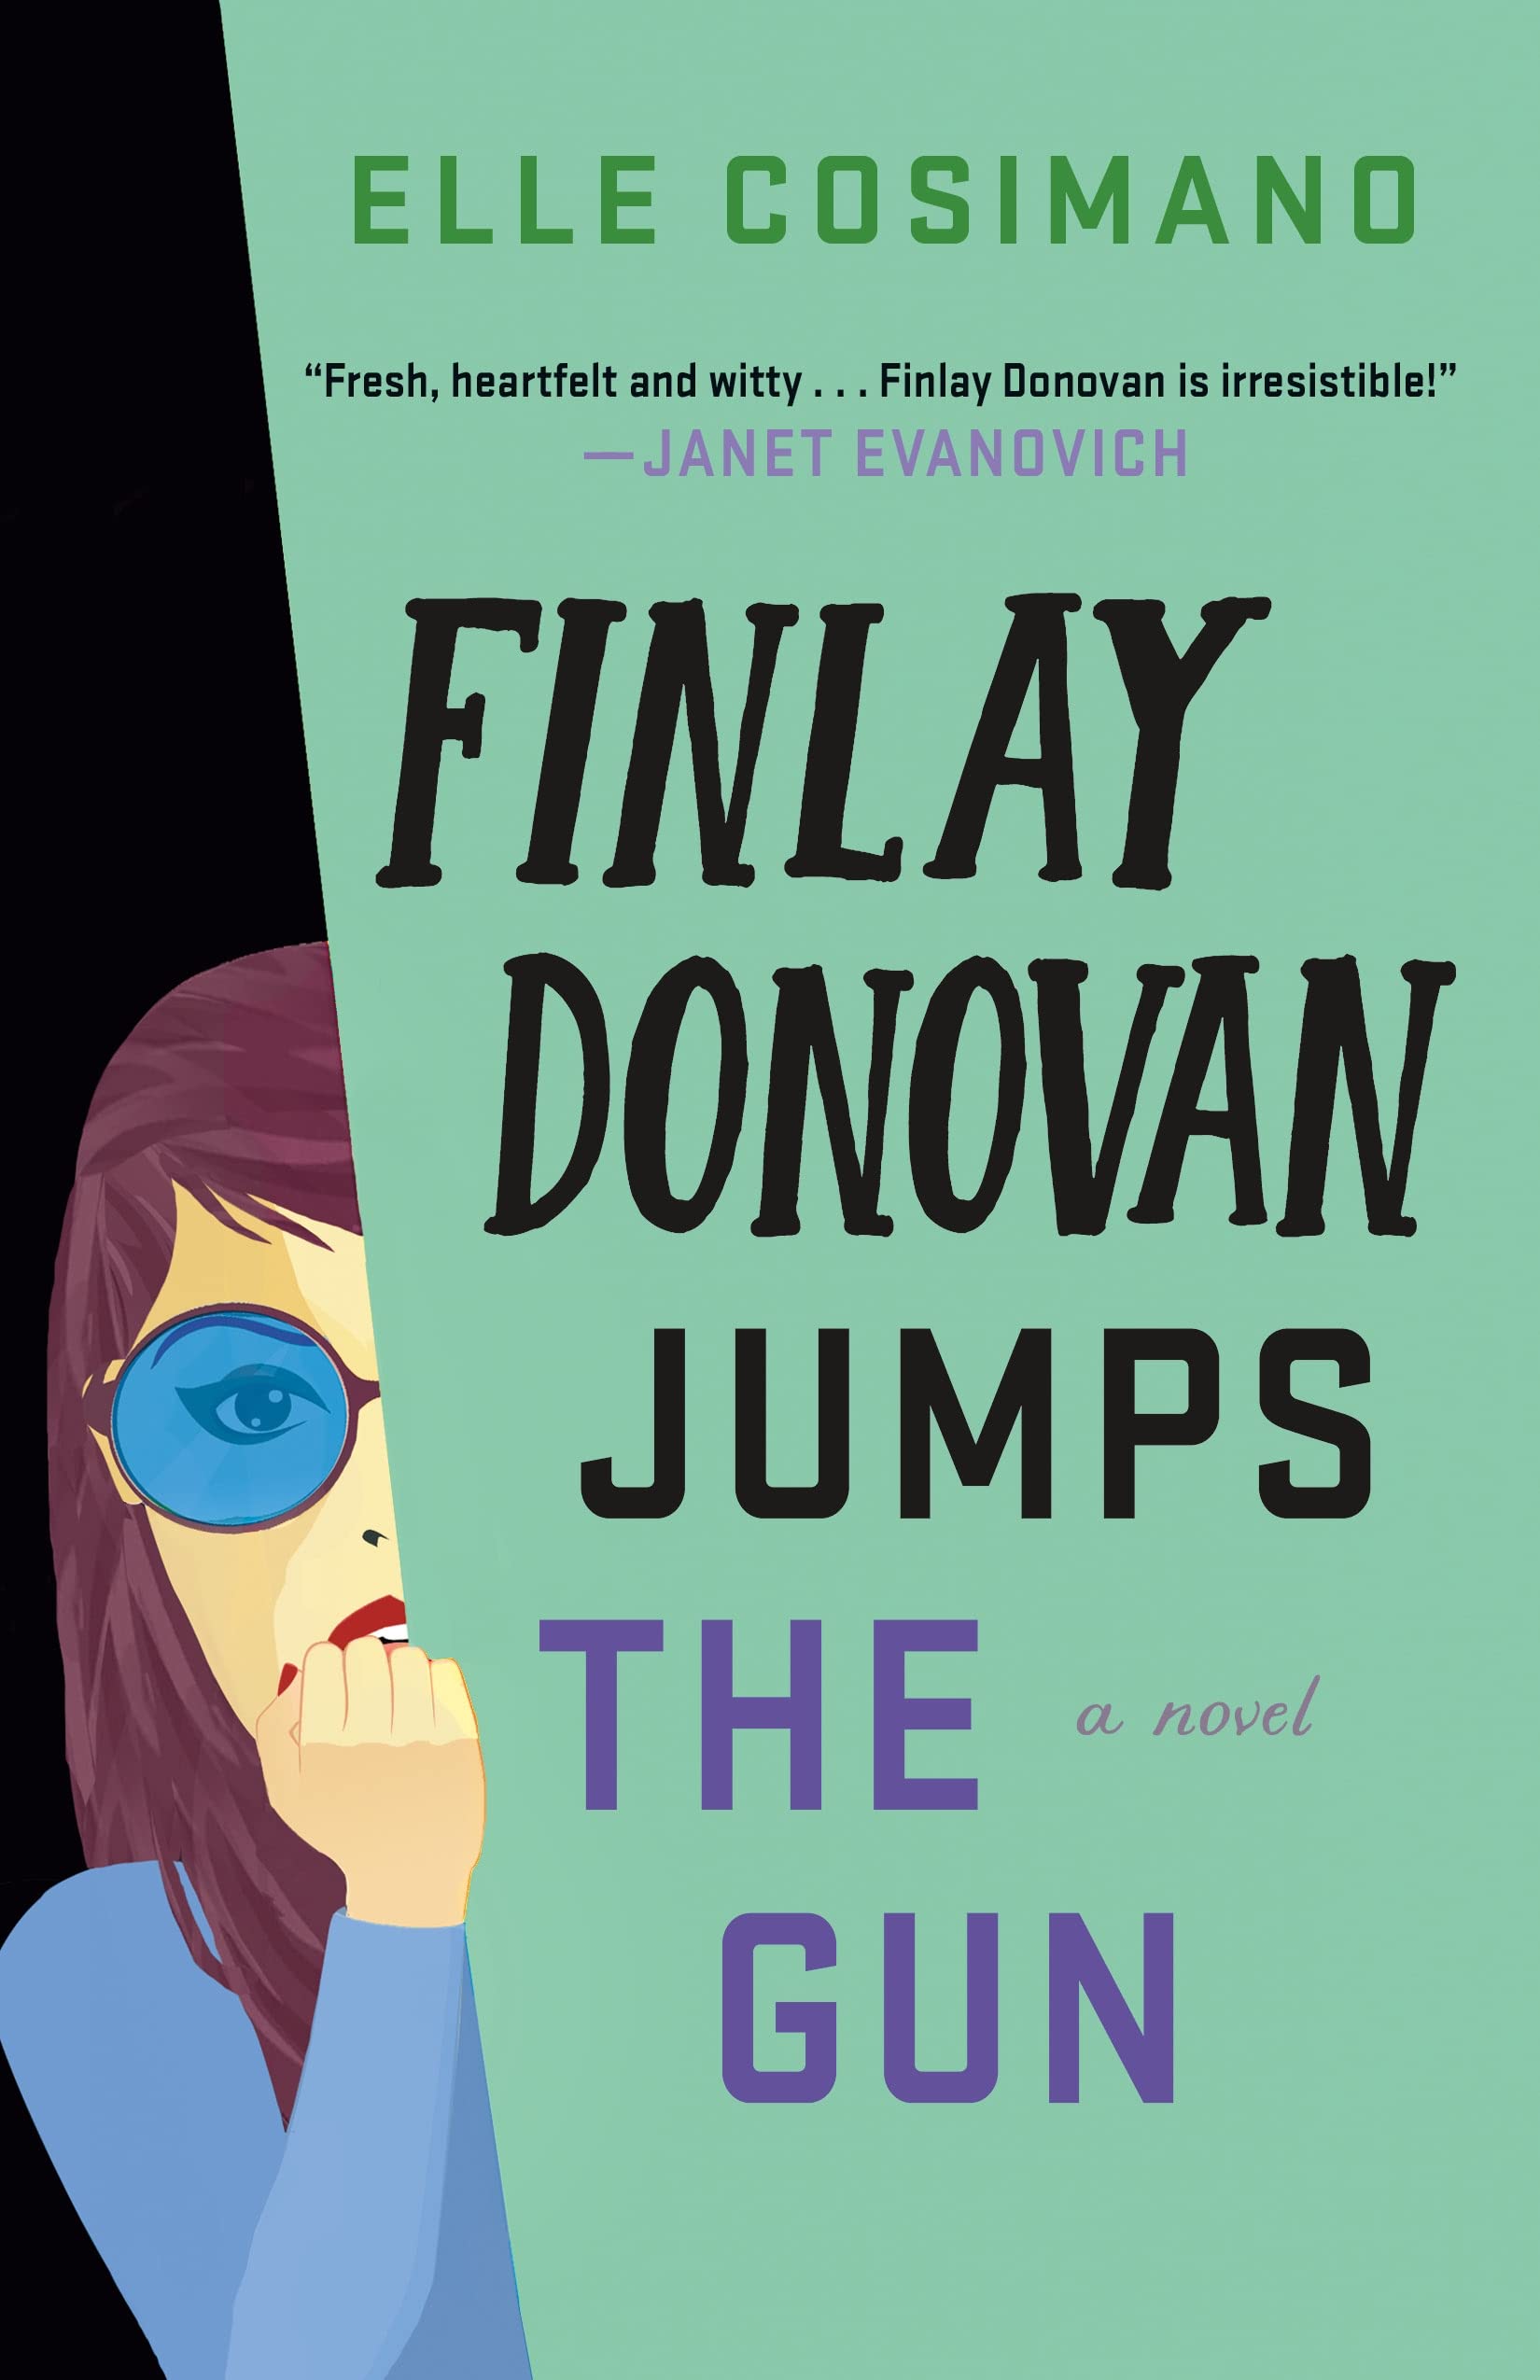 Image for "Finlay Donovan Jumps the Gun"